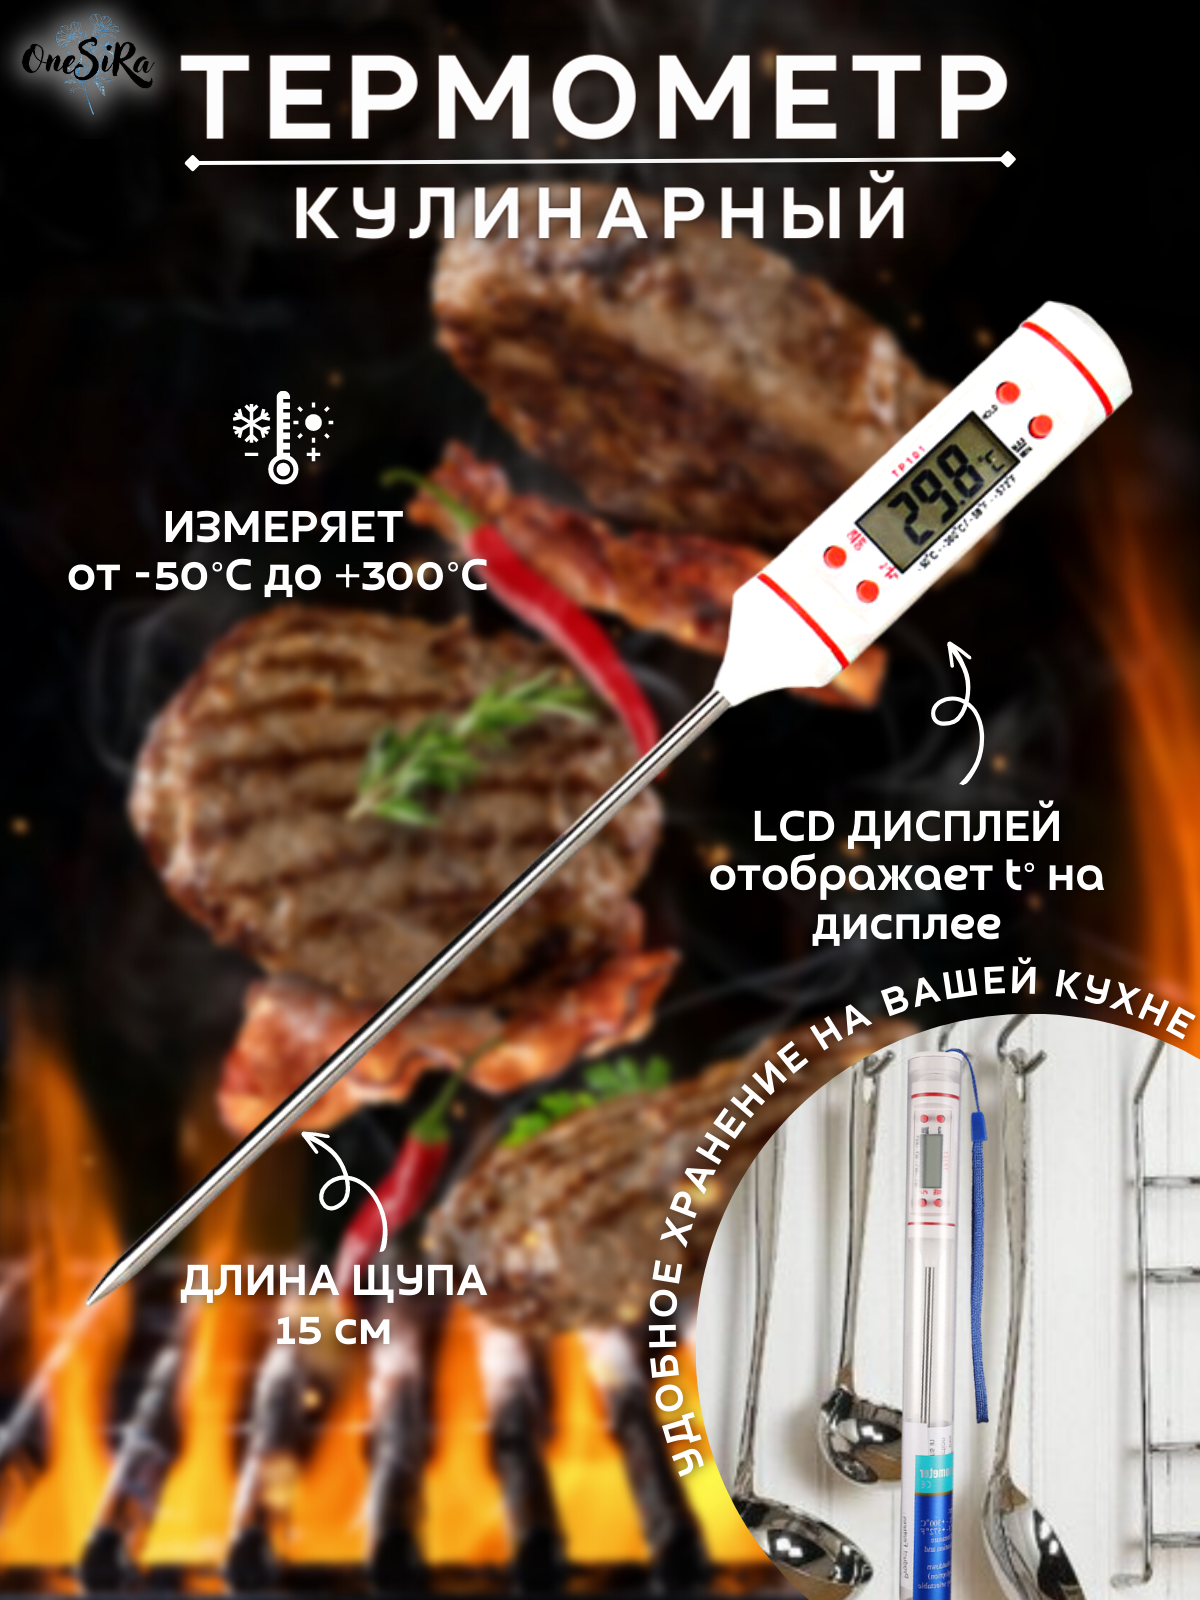 OneSiRa / Термощуп кухонный термометр электронный кулинарный с щупом белый